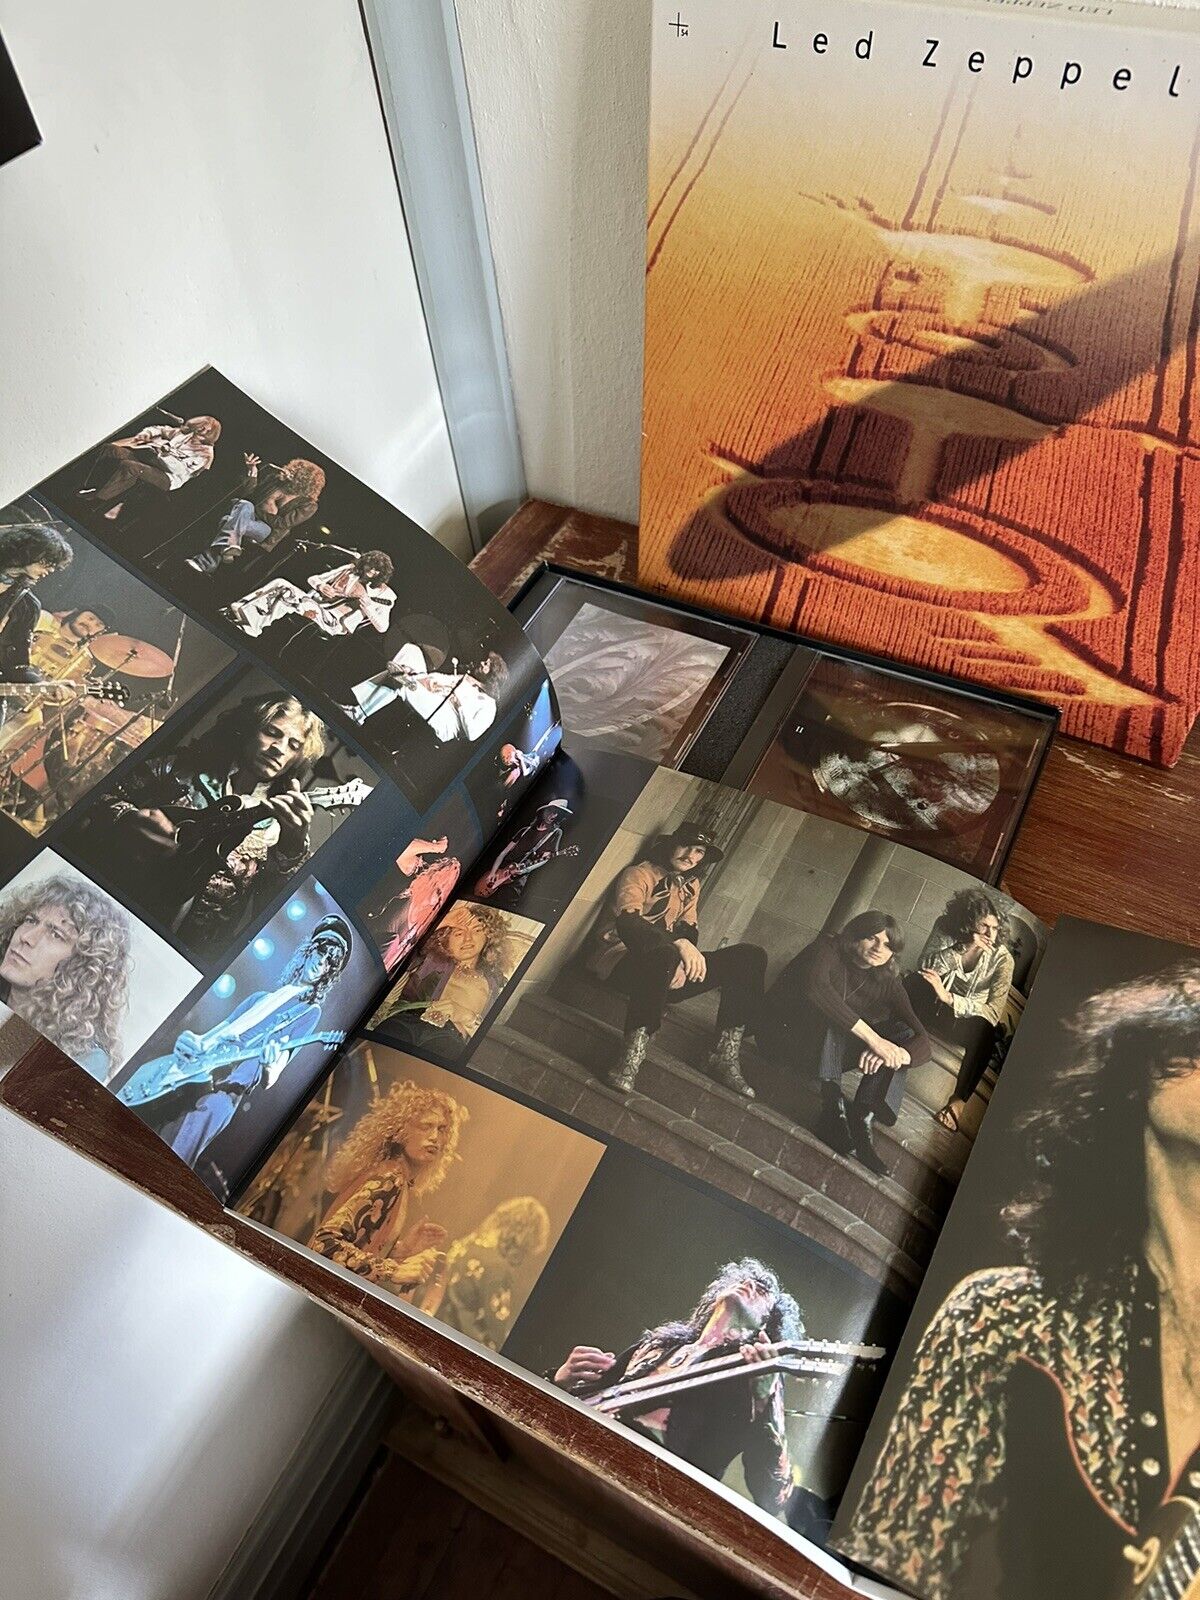 1990 Led Zeppelin 4 Compact Disc Box Set Atlantic 7 82144-2 VG Condition CD